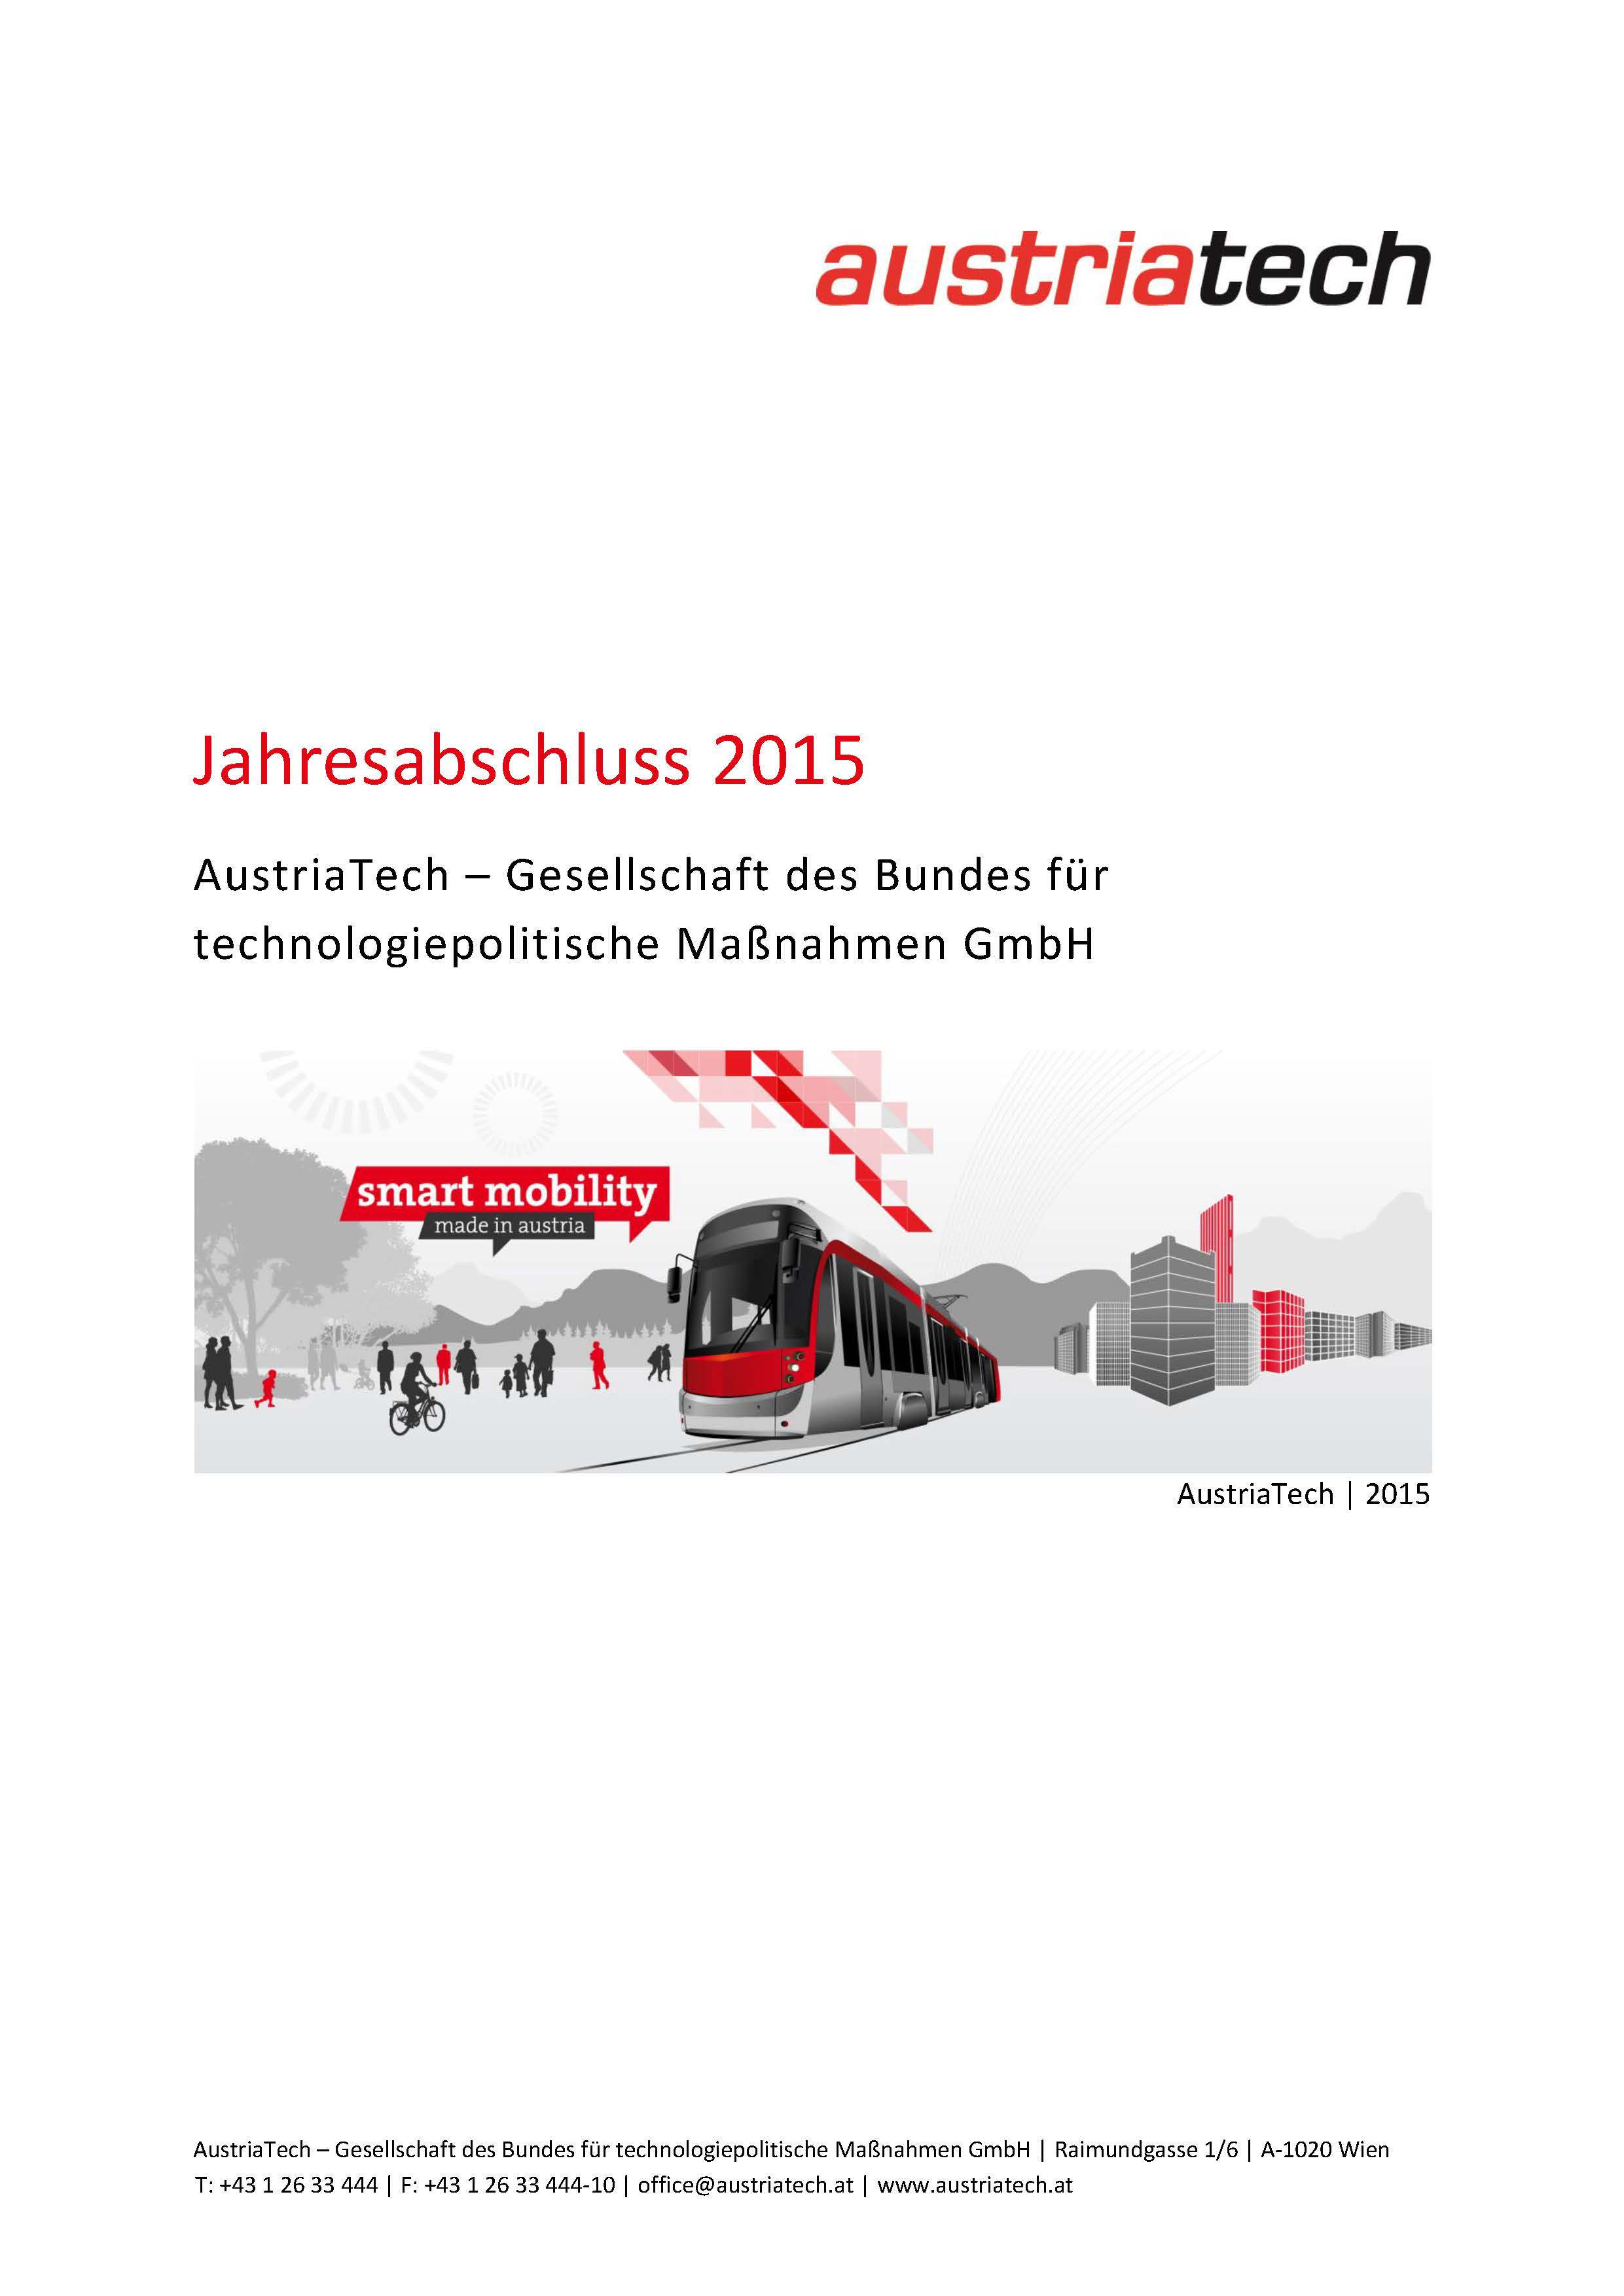 AustriaTech Jahreabschluss 2015